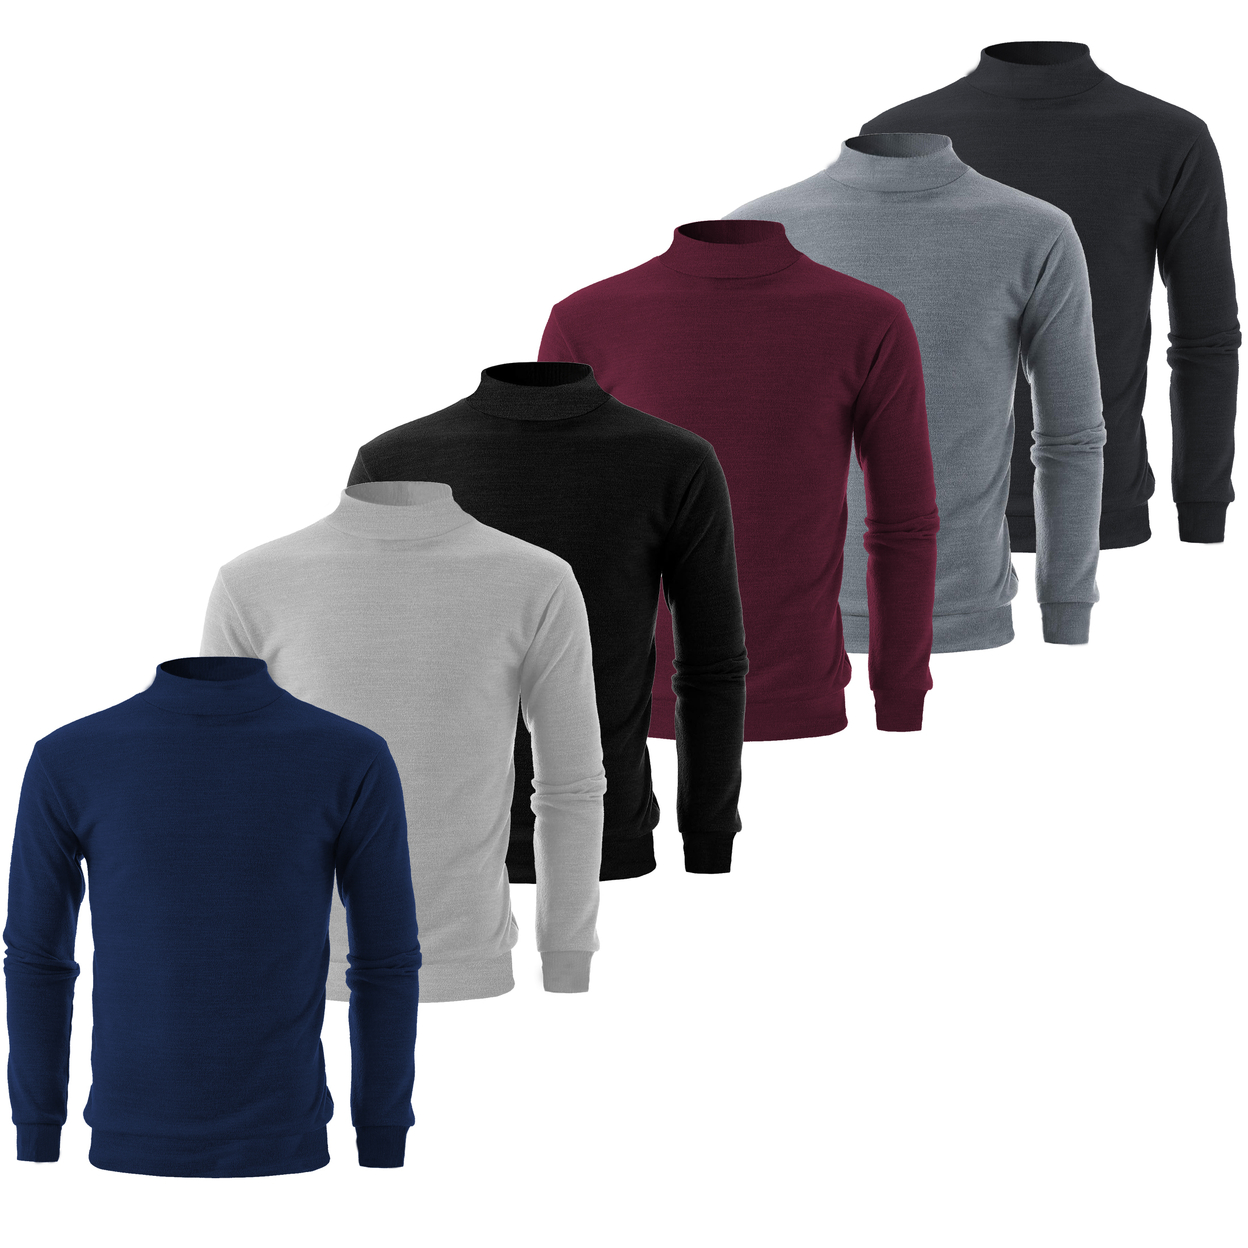 Men's Winter Warm Cozy Knit Slim-Fit Mock Neck Sweater - Grey, Large